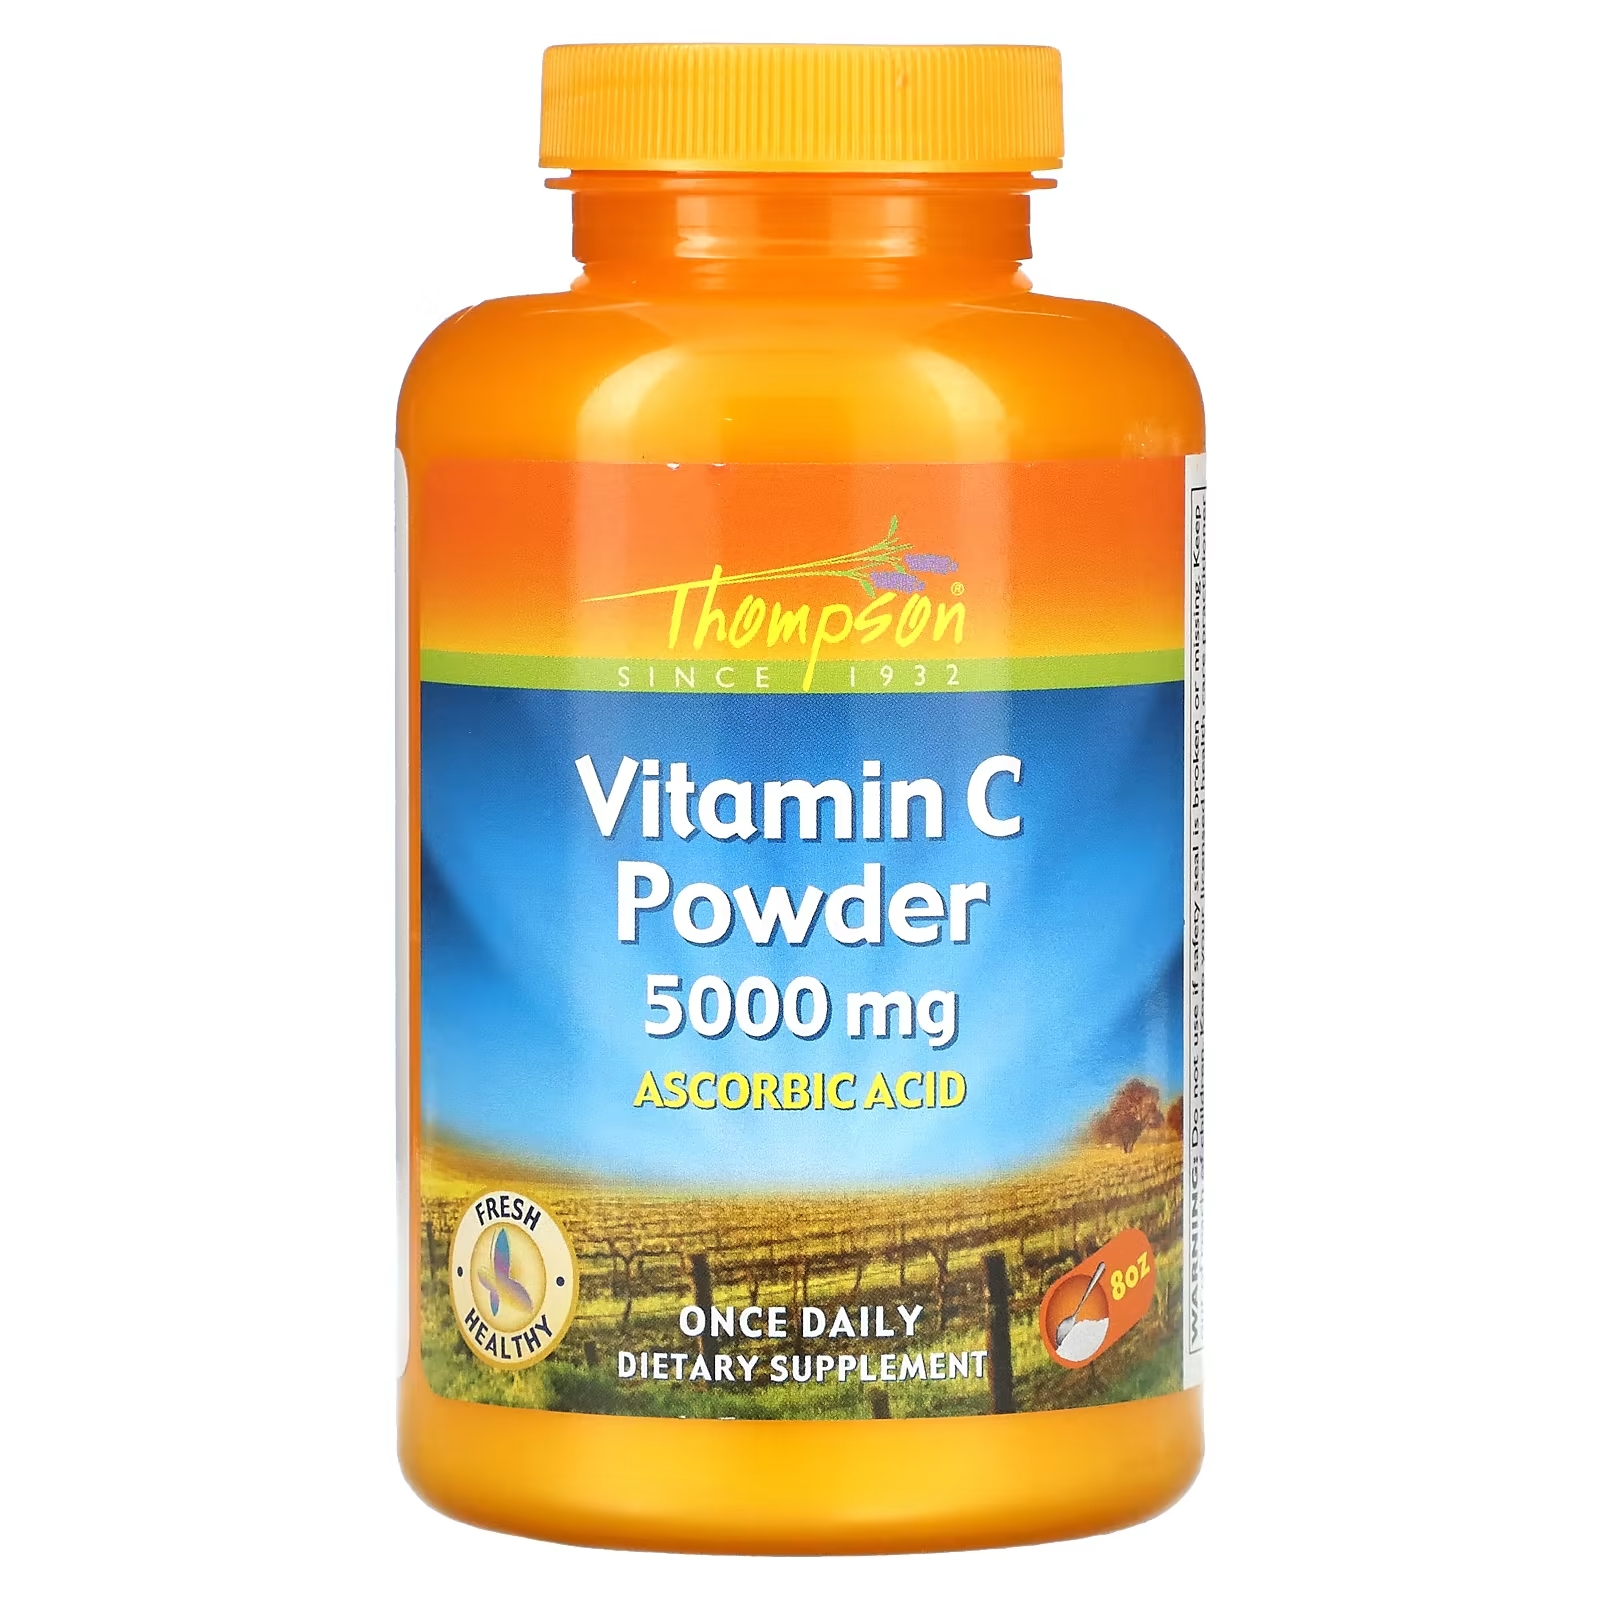 Thompson Витамин C в порошке 5000 мг, 8 унций thompson витамин c в порошке 5000 мг 8 унций